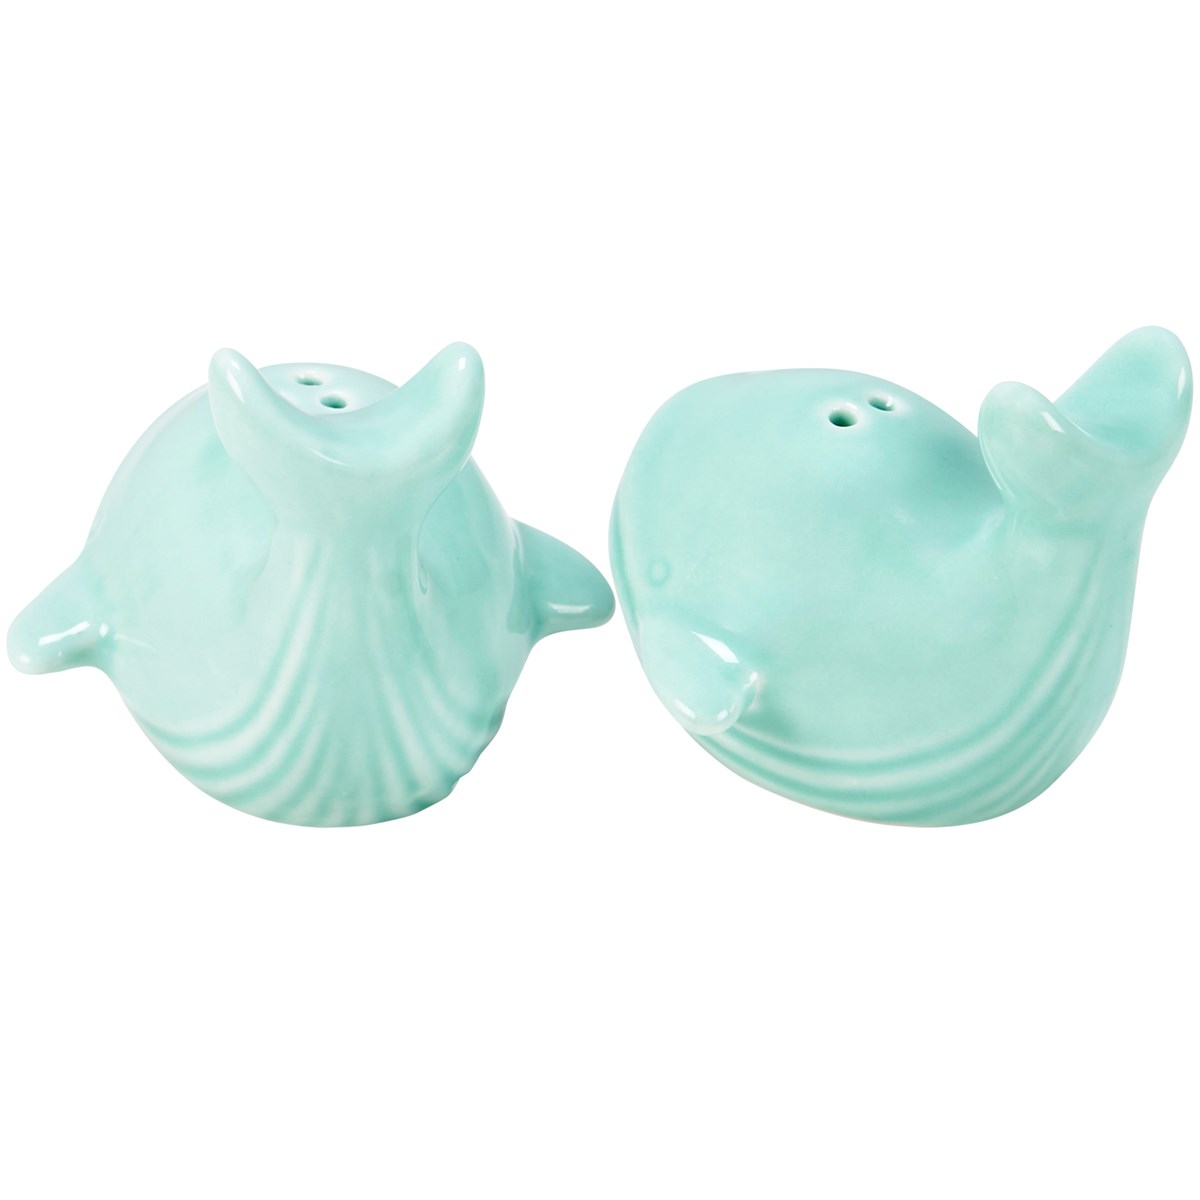 Whales Salt And Pepper Shakers - Ceramic, Plastic